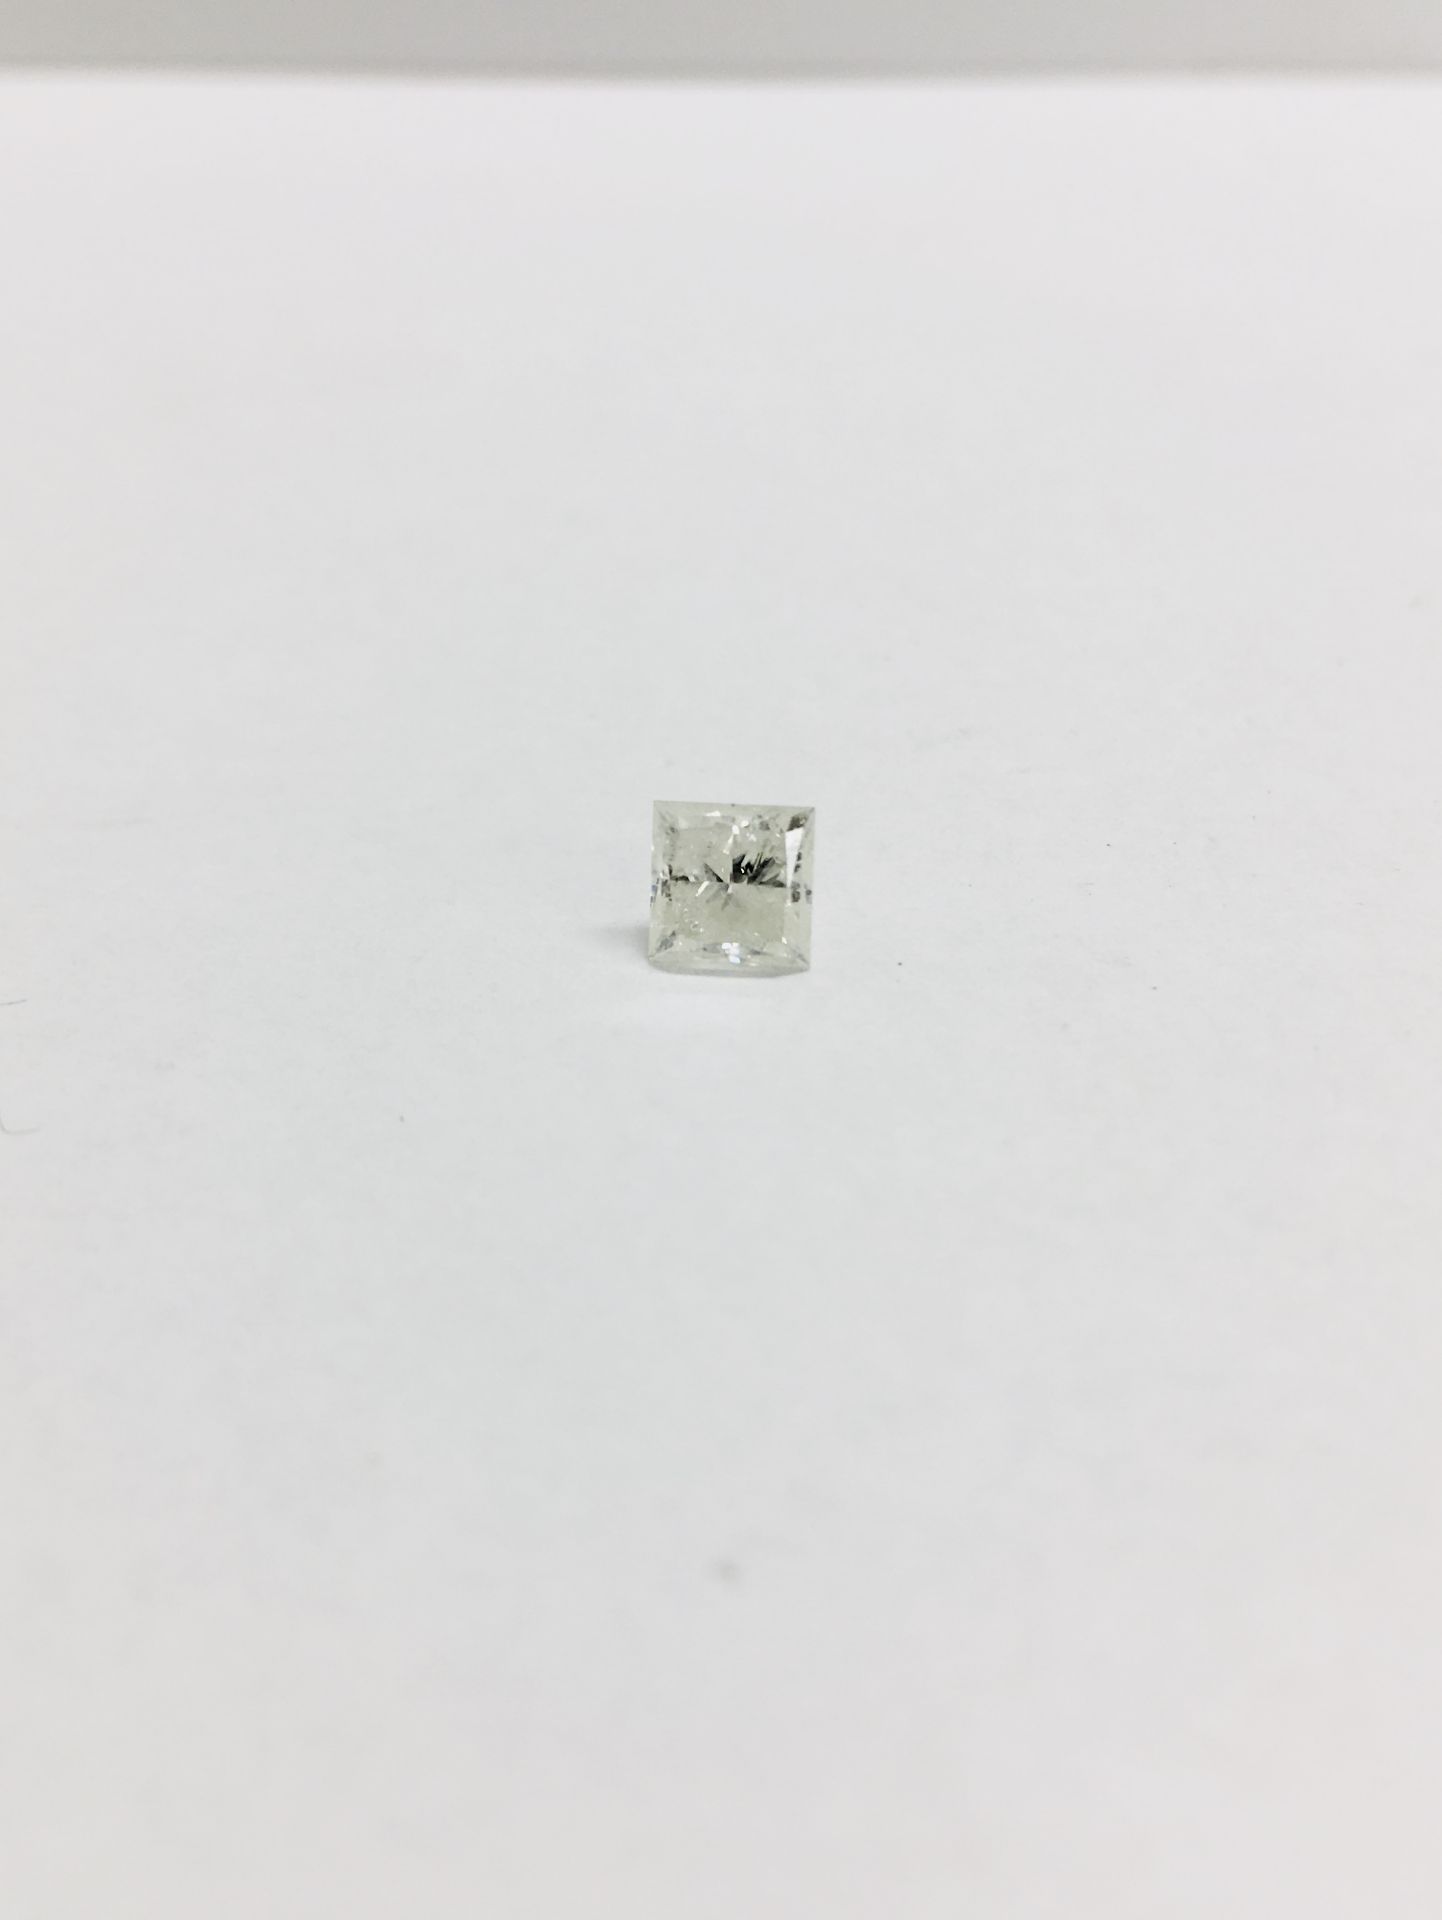 1.03ct Princess cut Diamond,Enhanced stone,H colour i2 clarity,Valued at 1490